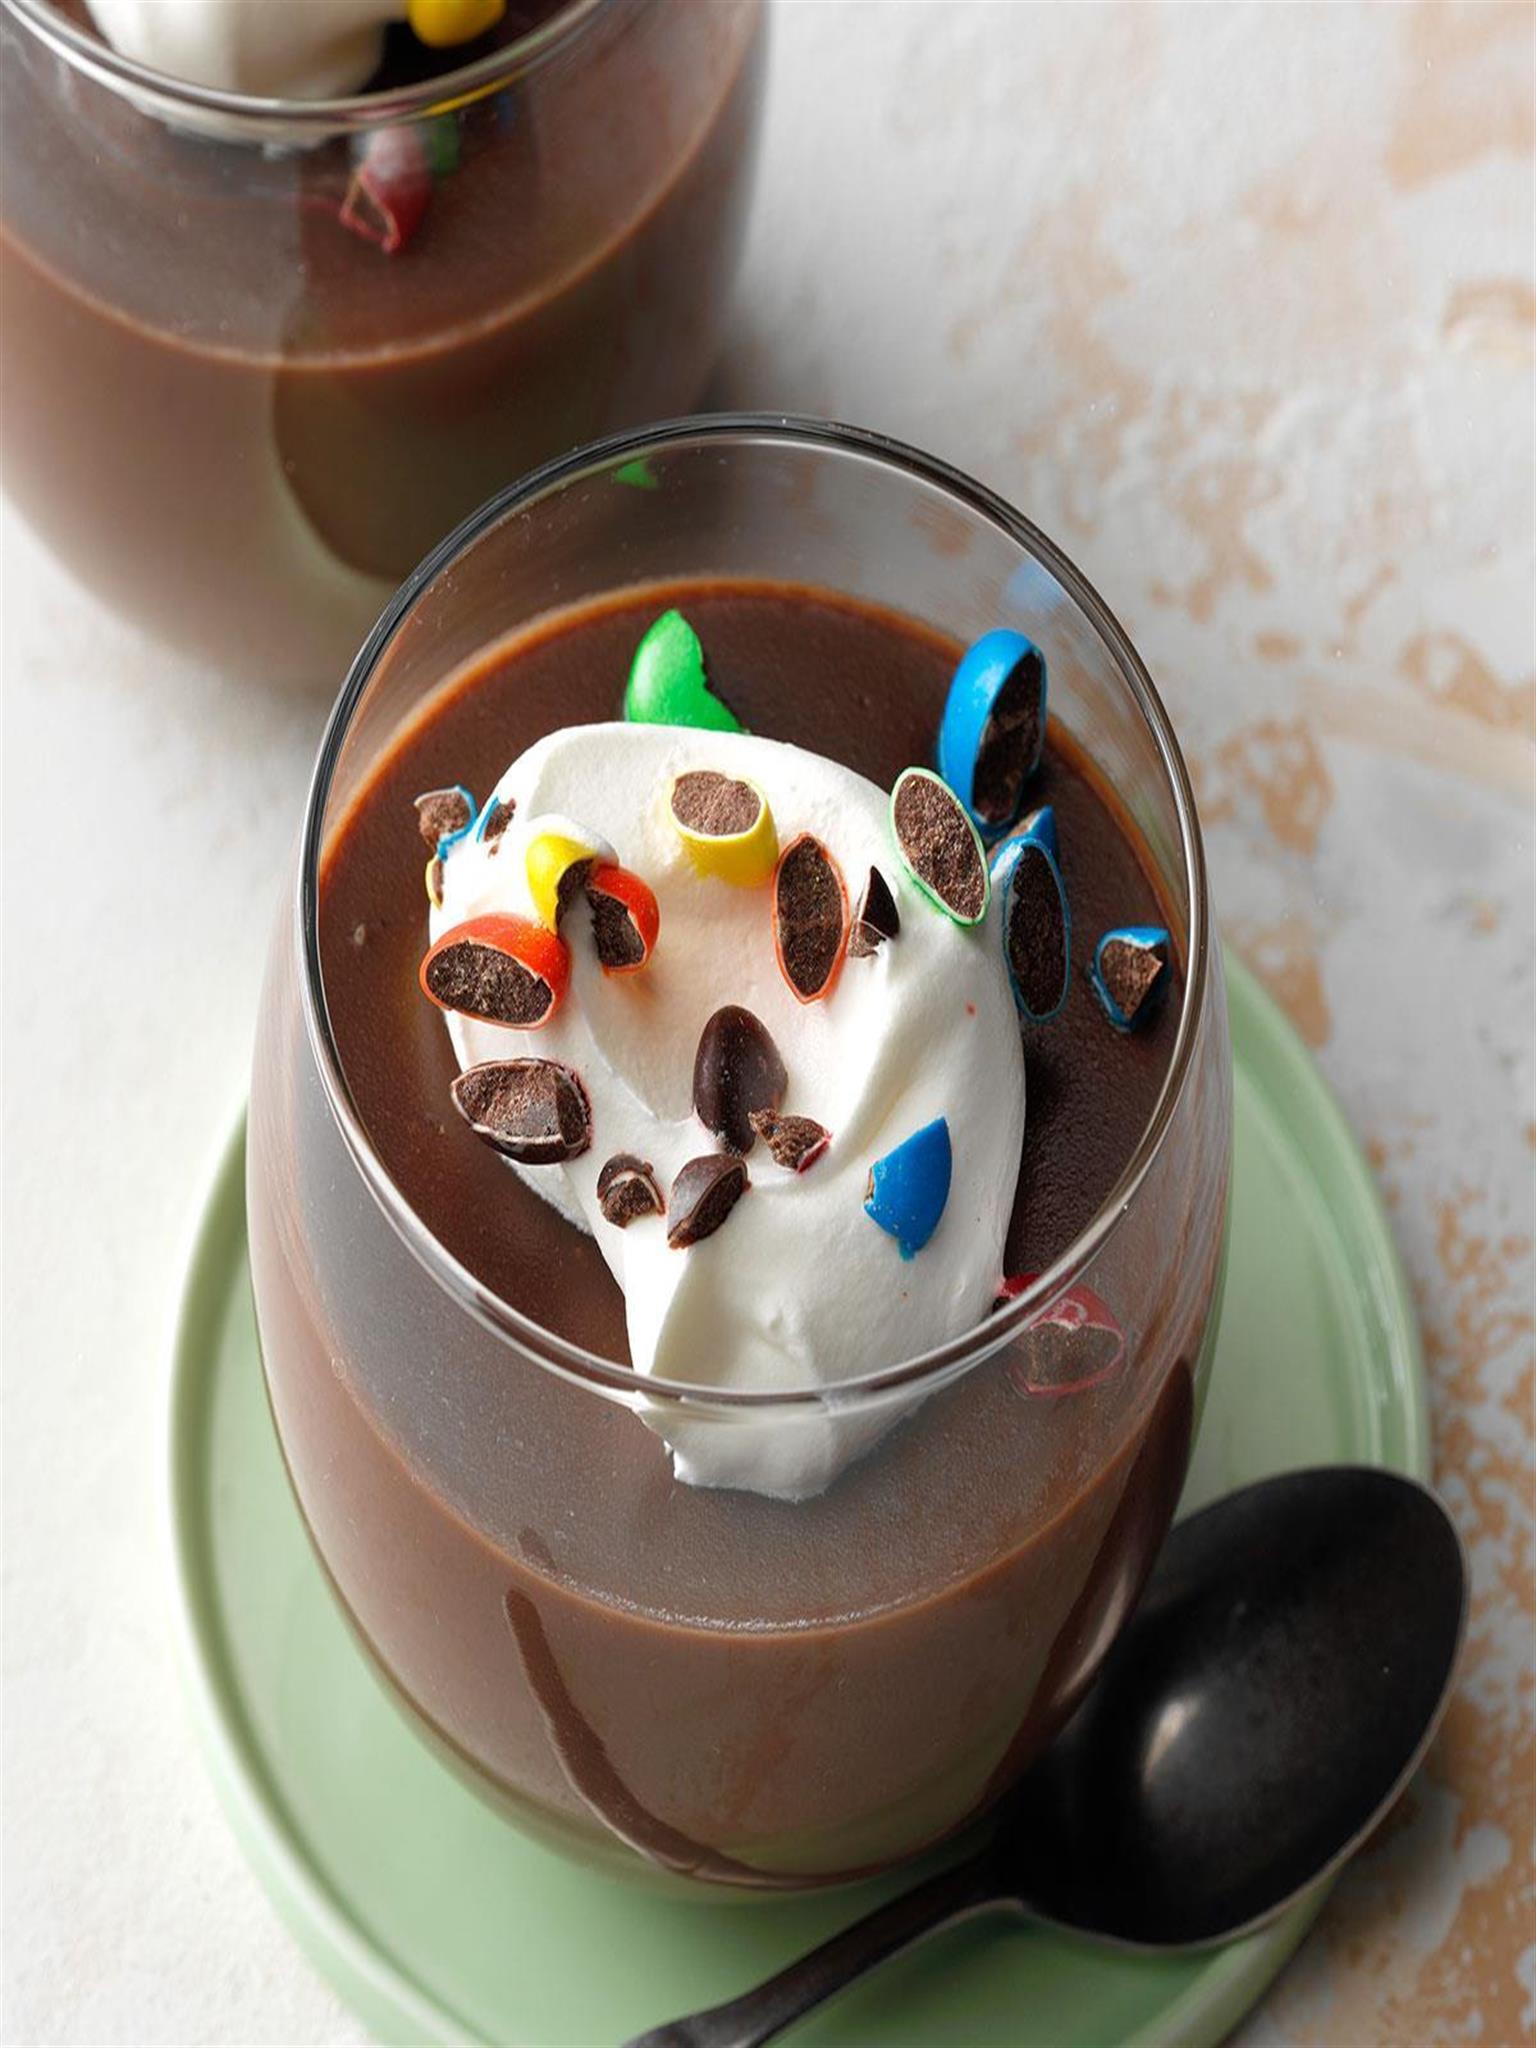 Homemade Chocolate Pudding Recipe: How to Make It